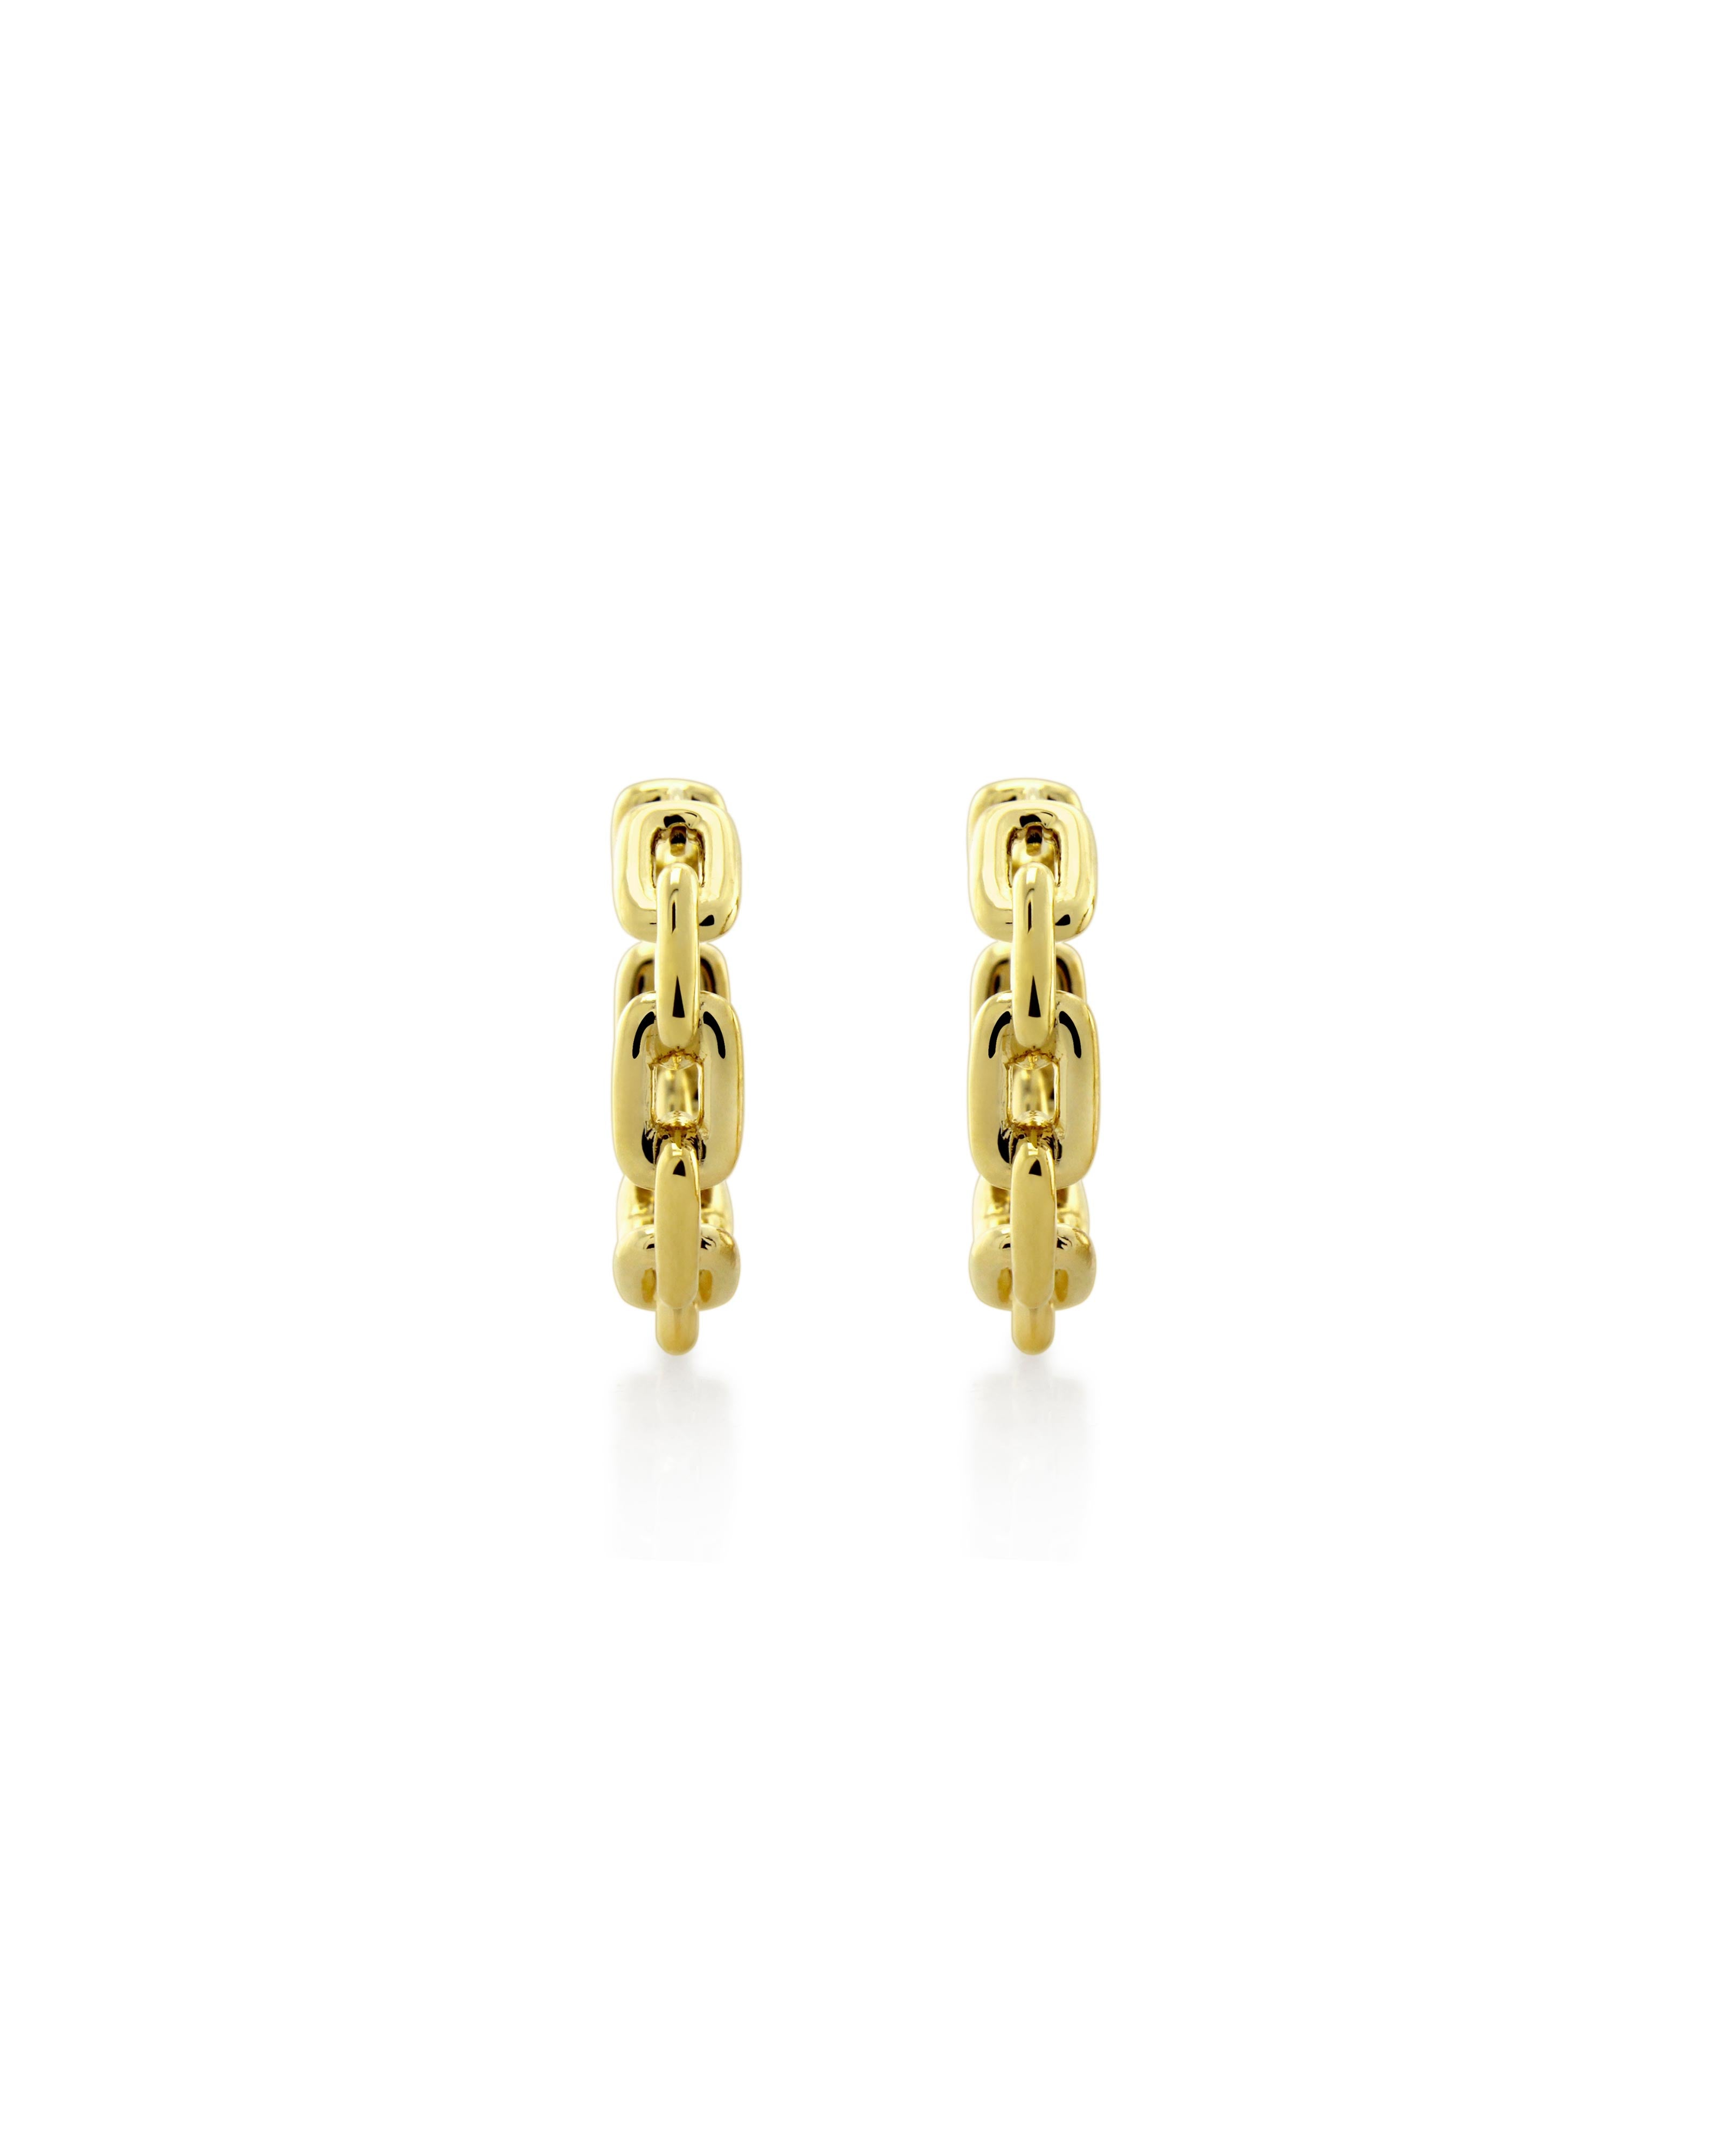      sener-besim-chunky-chain-hoops-gold-earrings